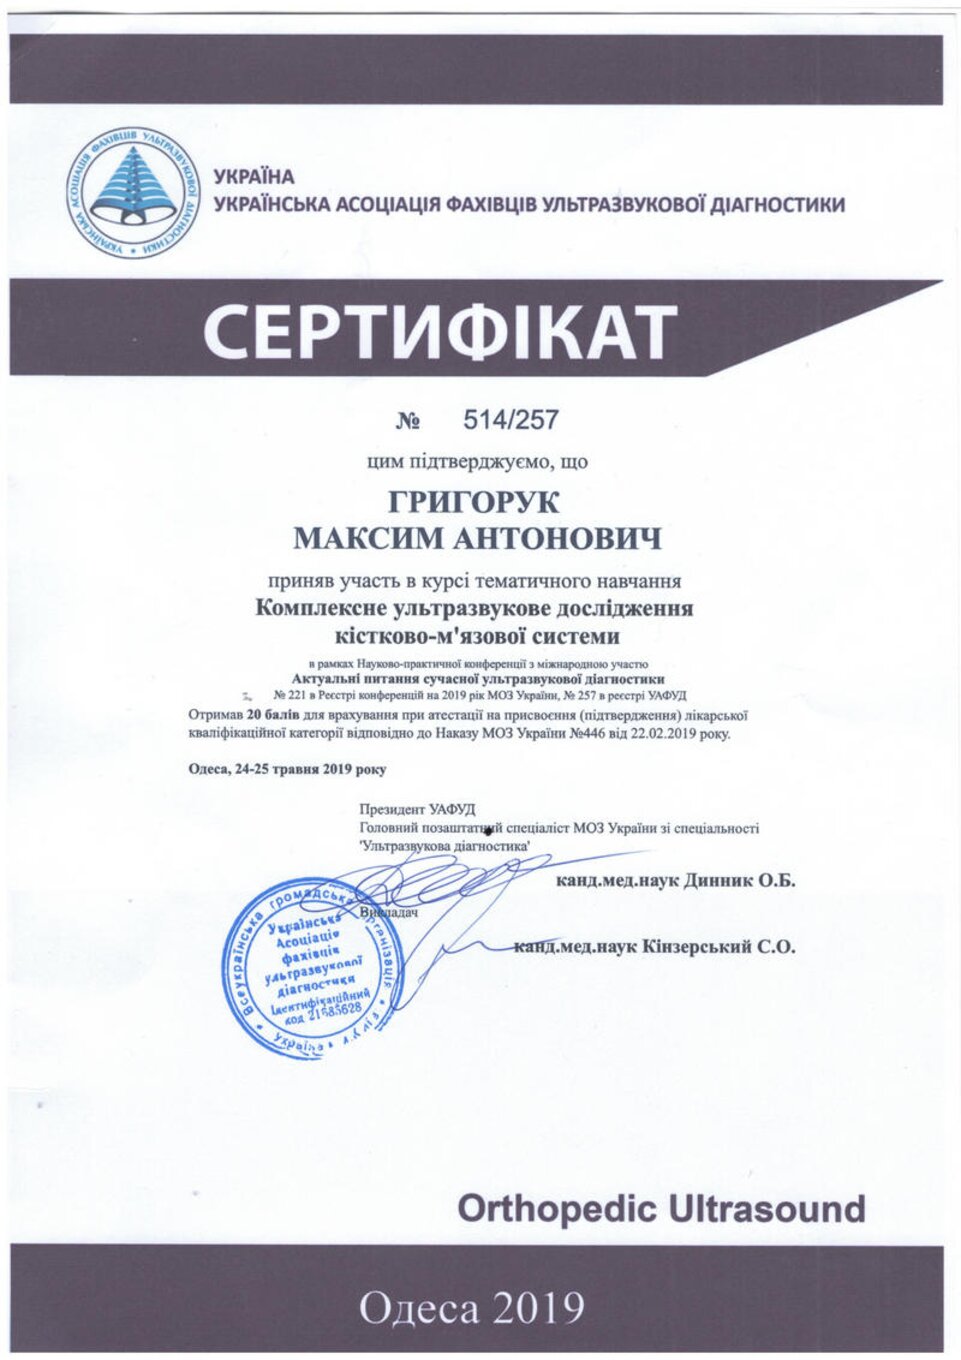 certificates/grigoruk-maksim-antonovich/hemomedika-cert-grigoruk-07.jpg